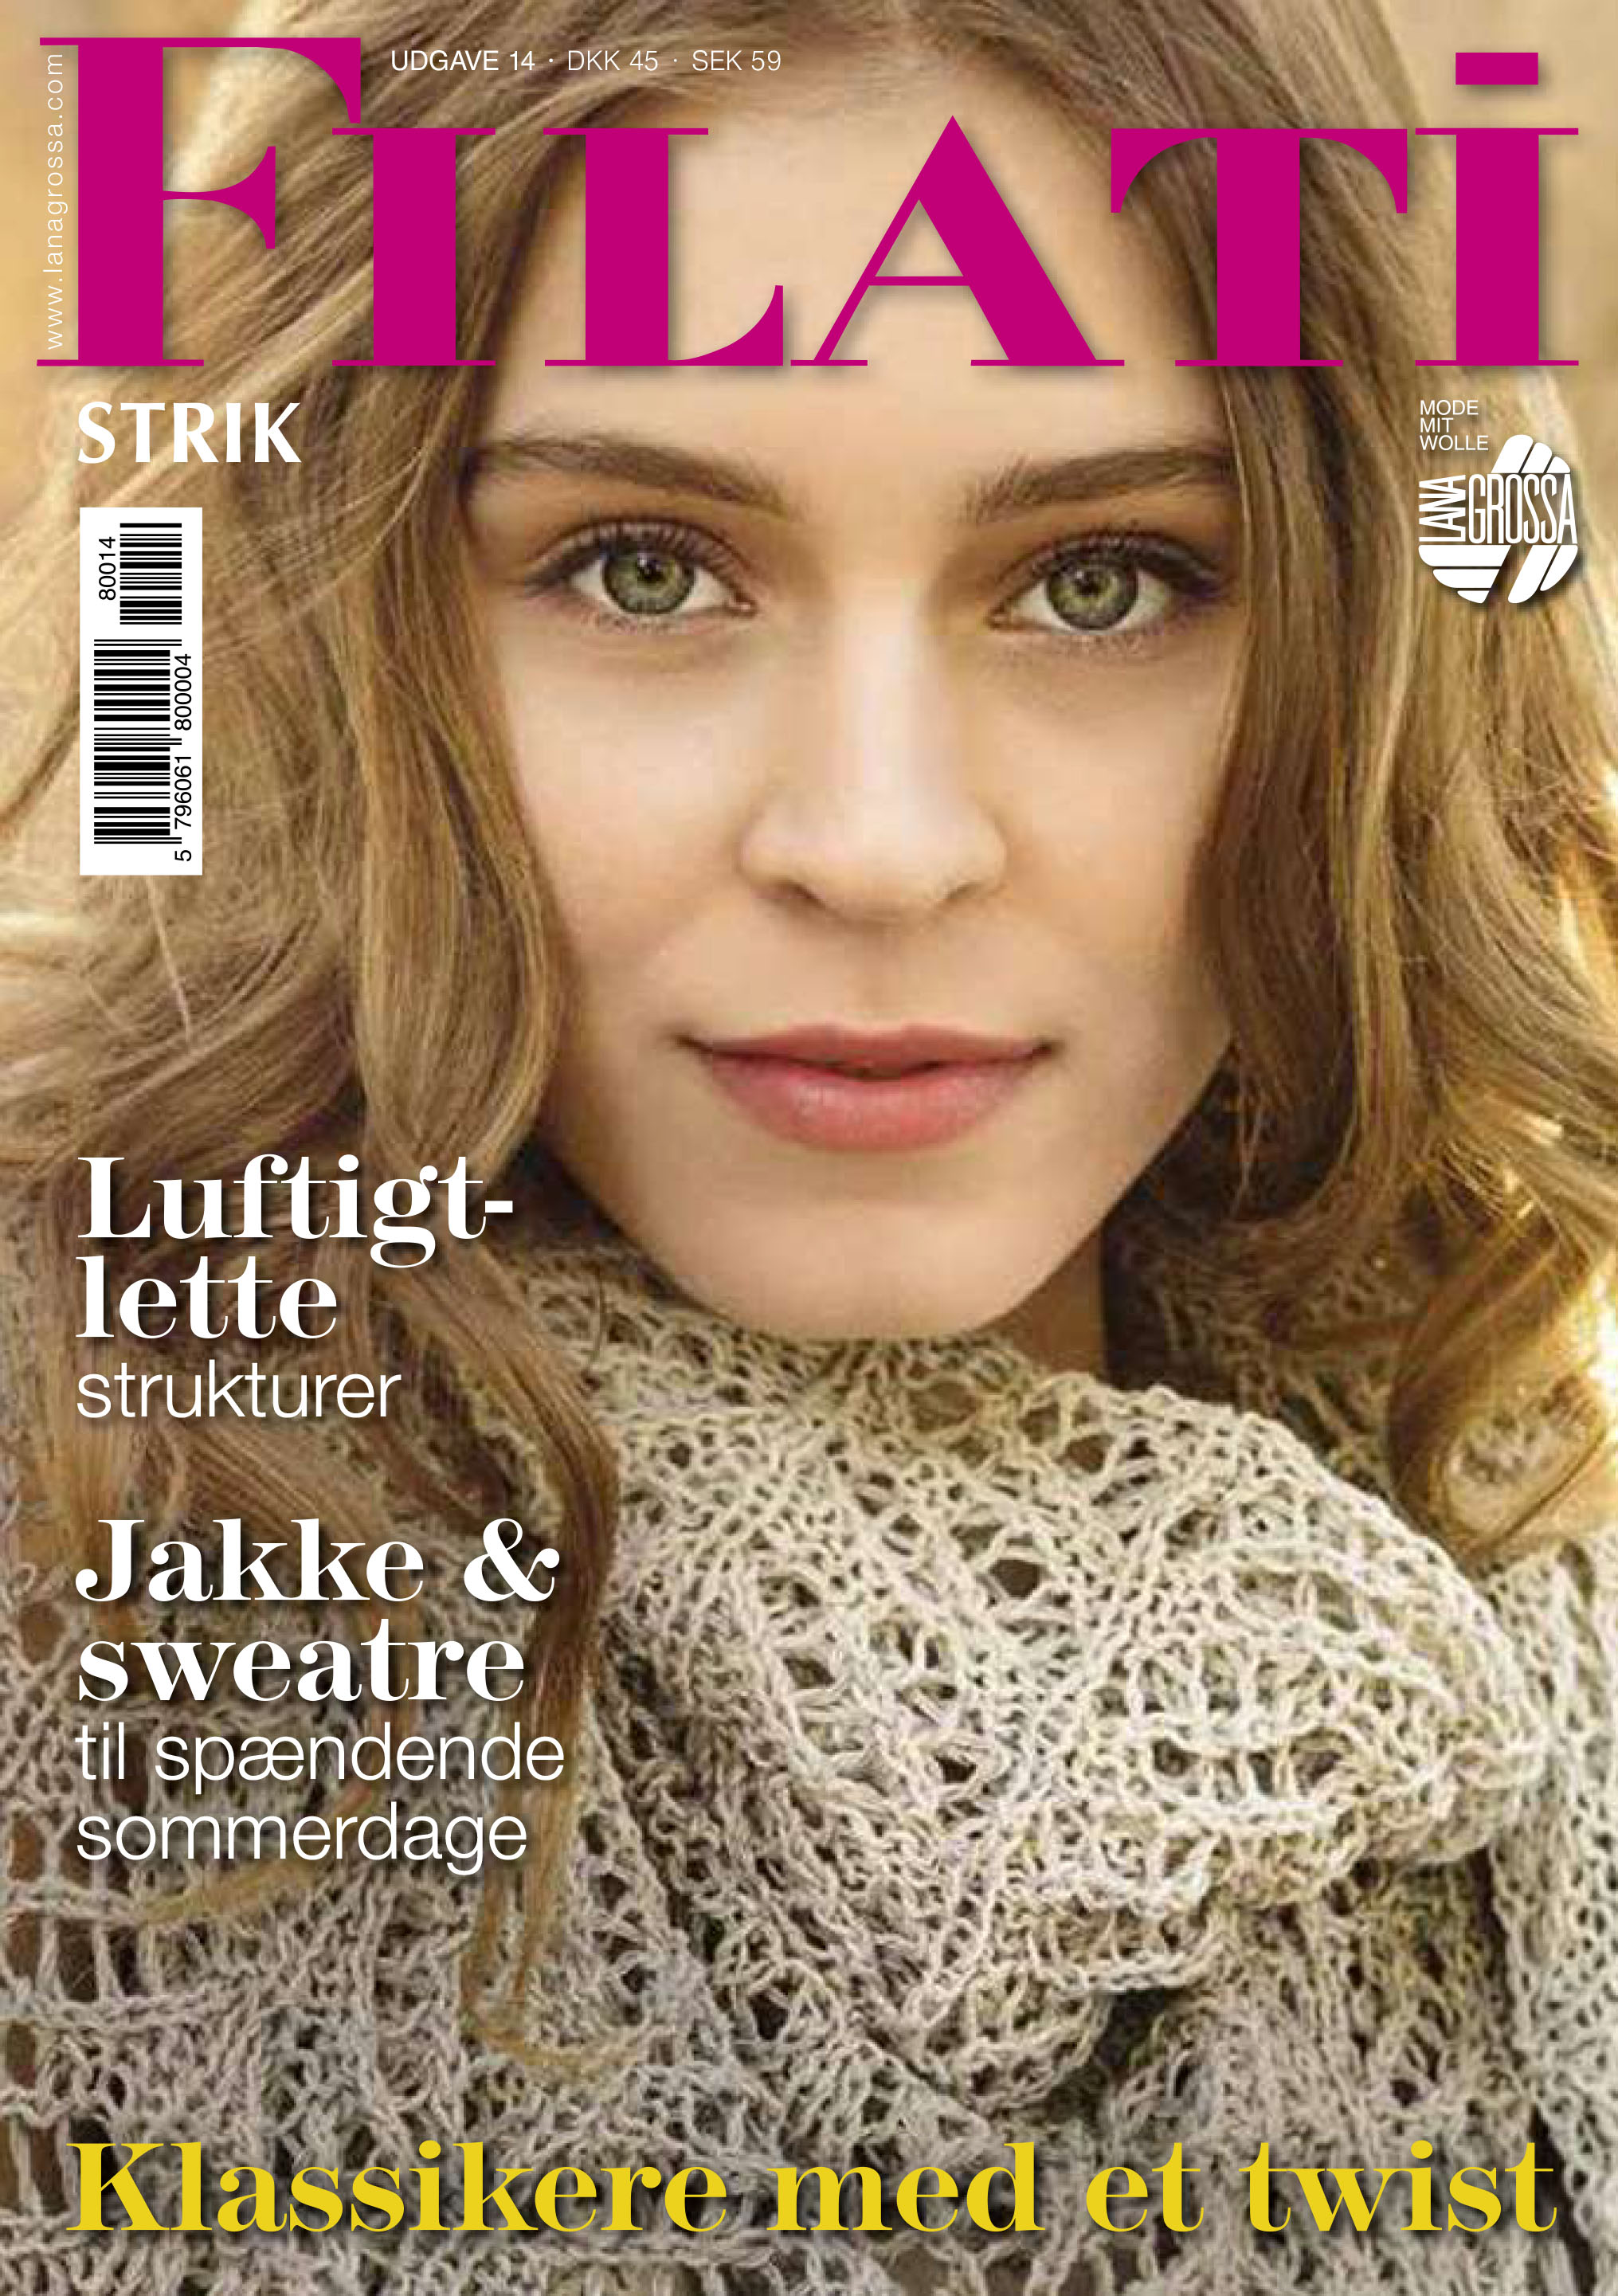 Grossa mode-magazine FILATI Strik Udgave 14 (DK) | FILATI Onlineshop